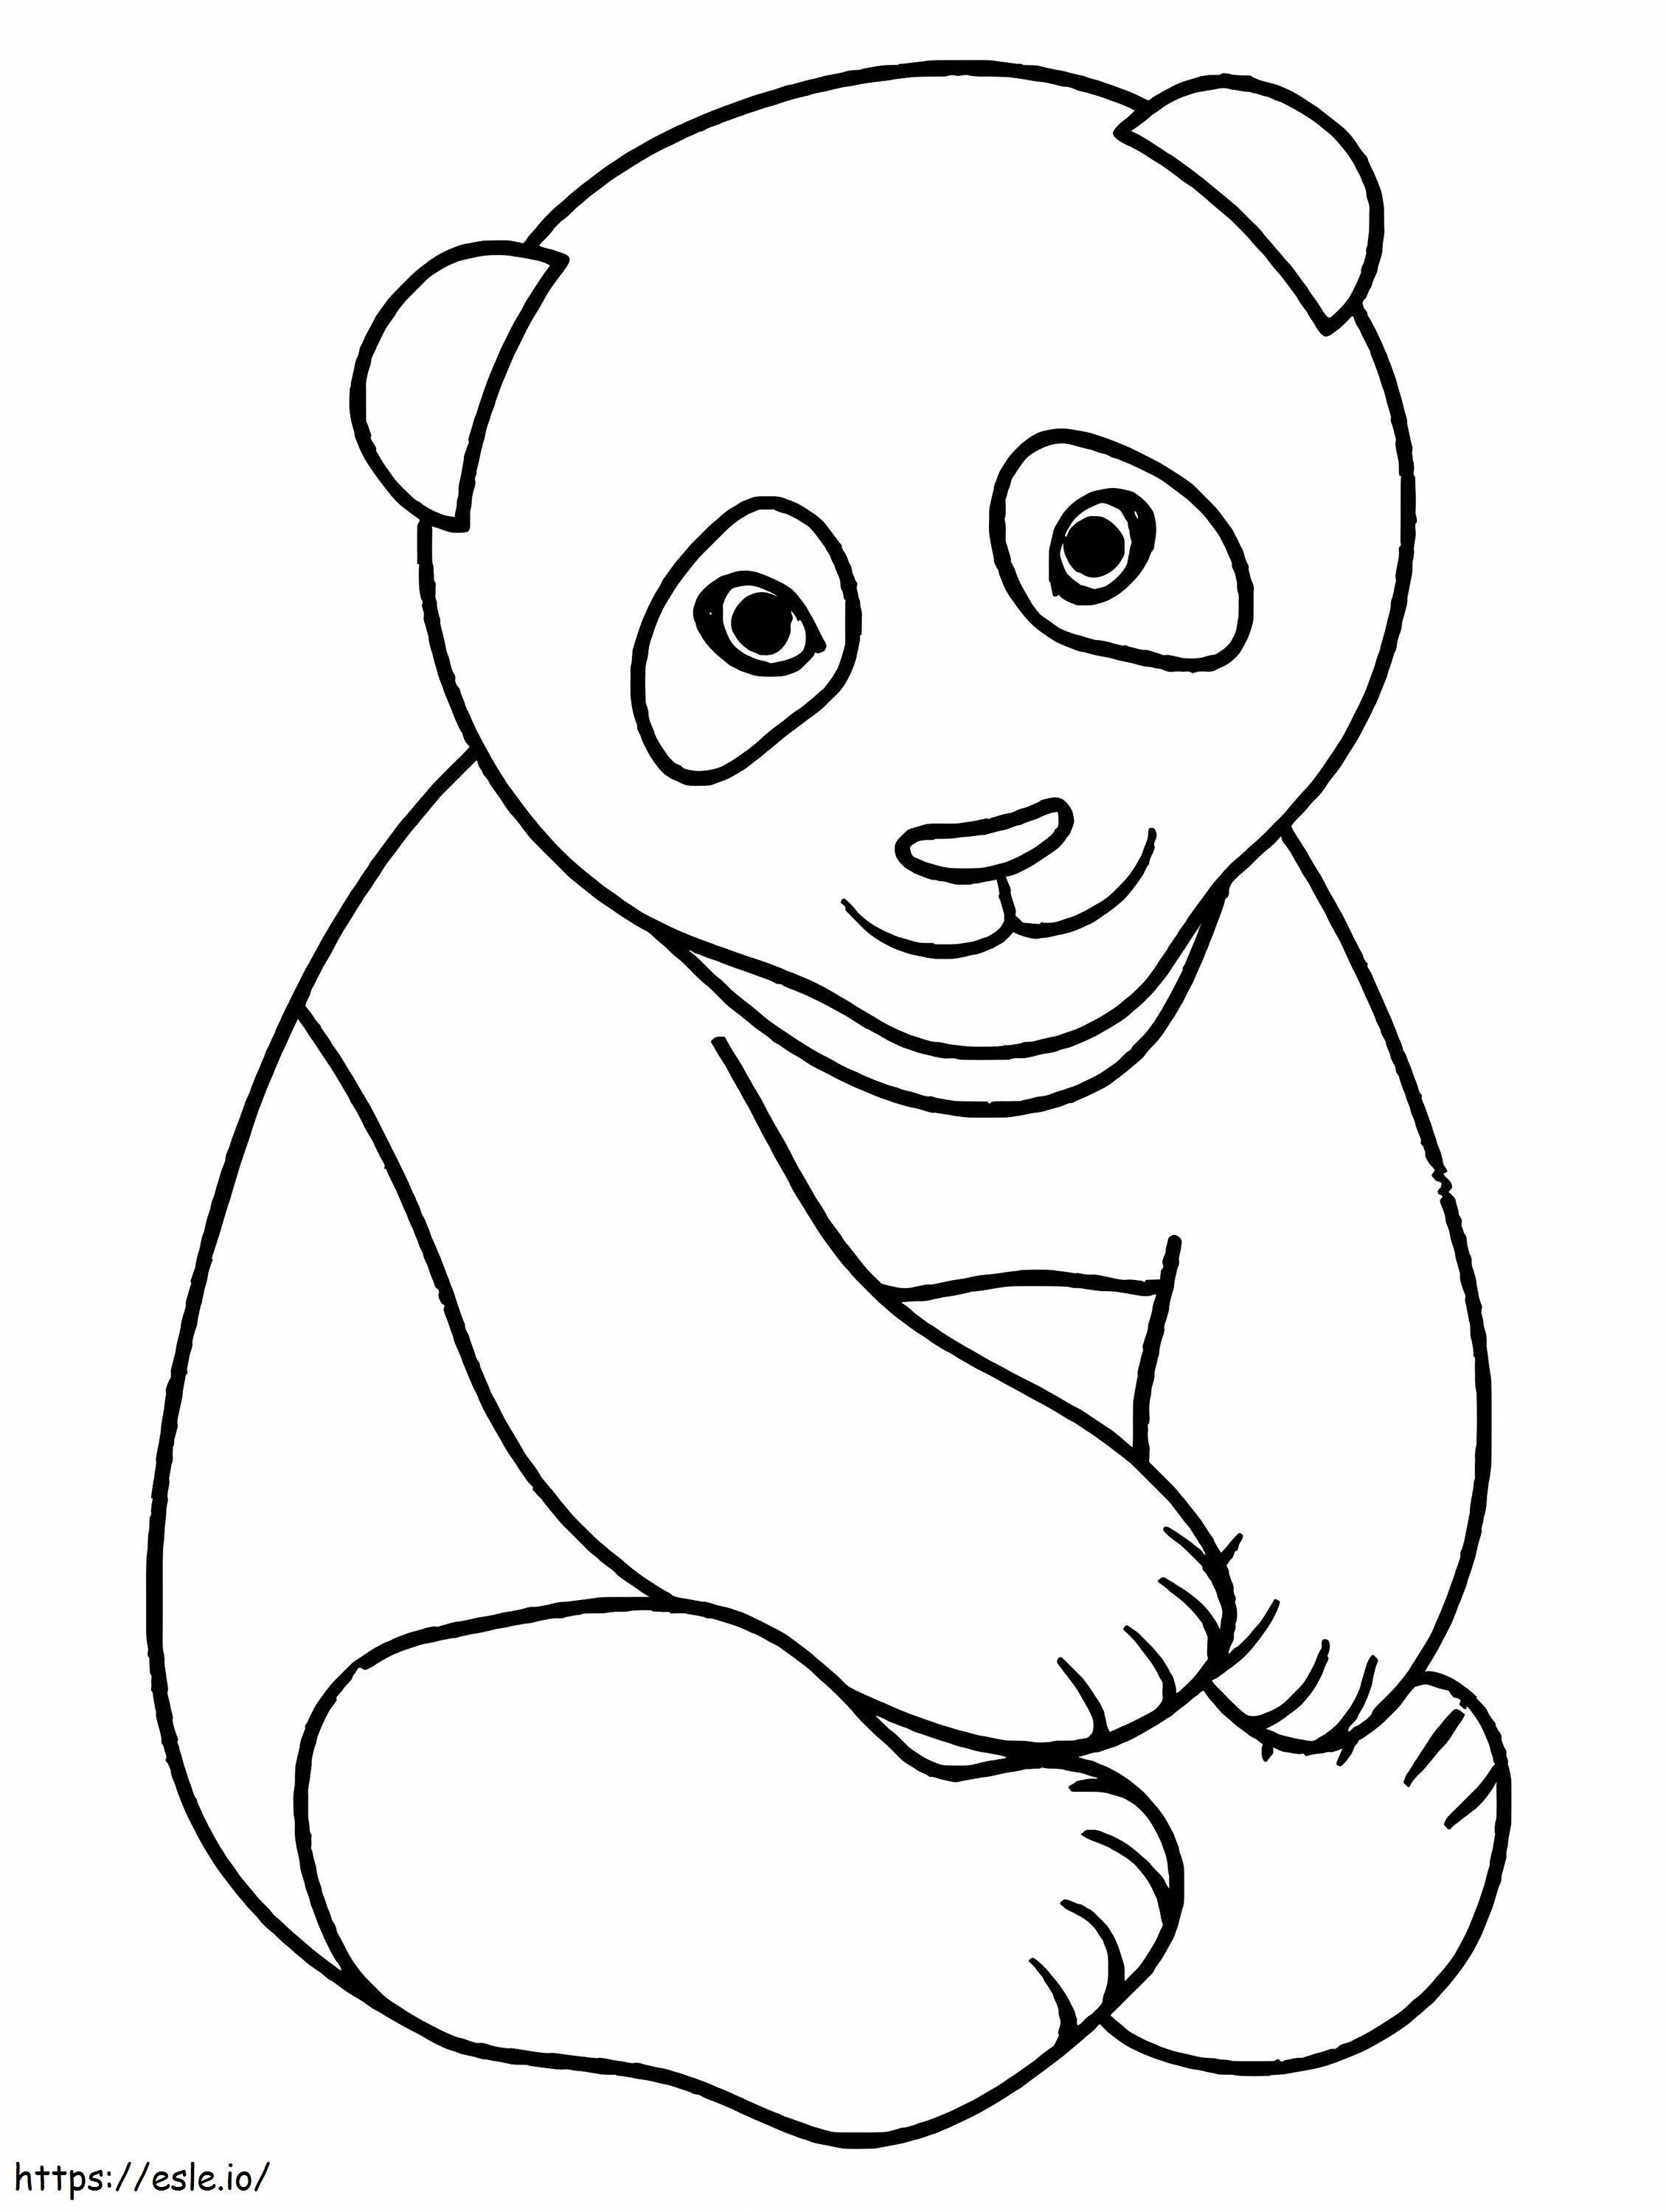 Cute Panda coloring page